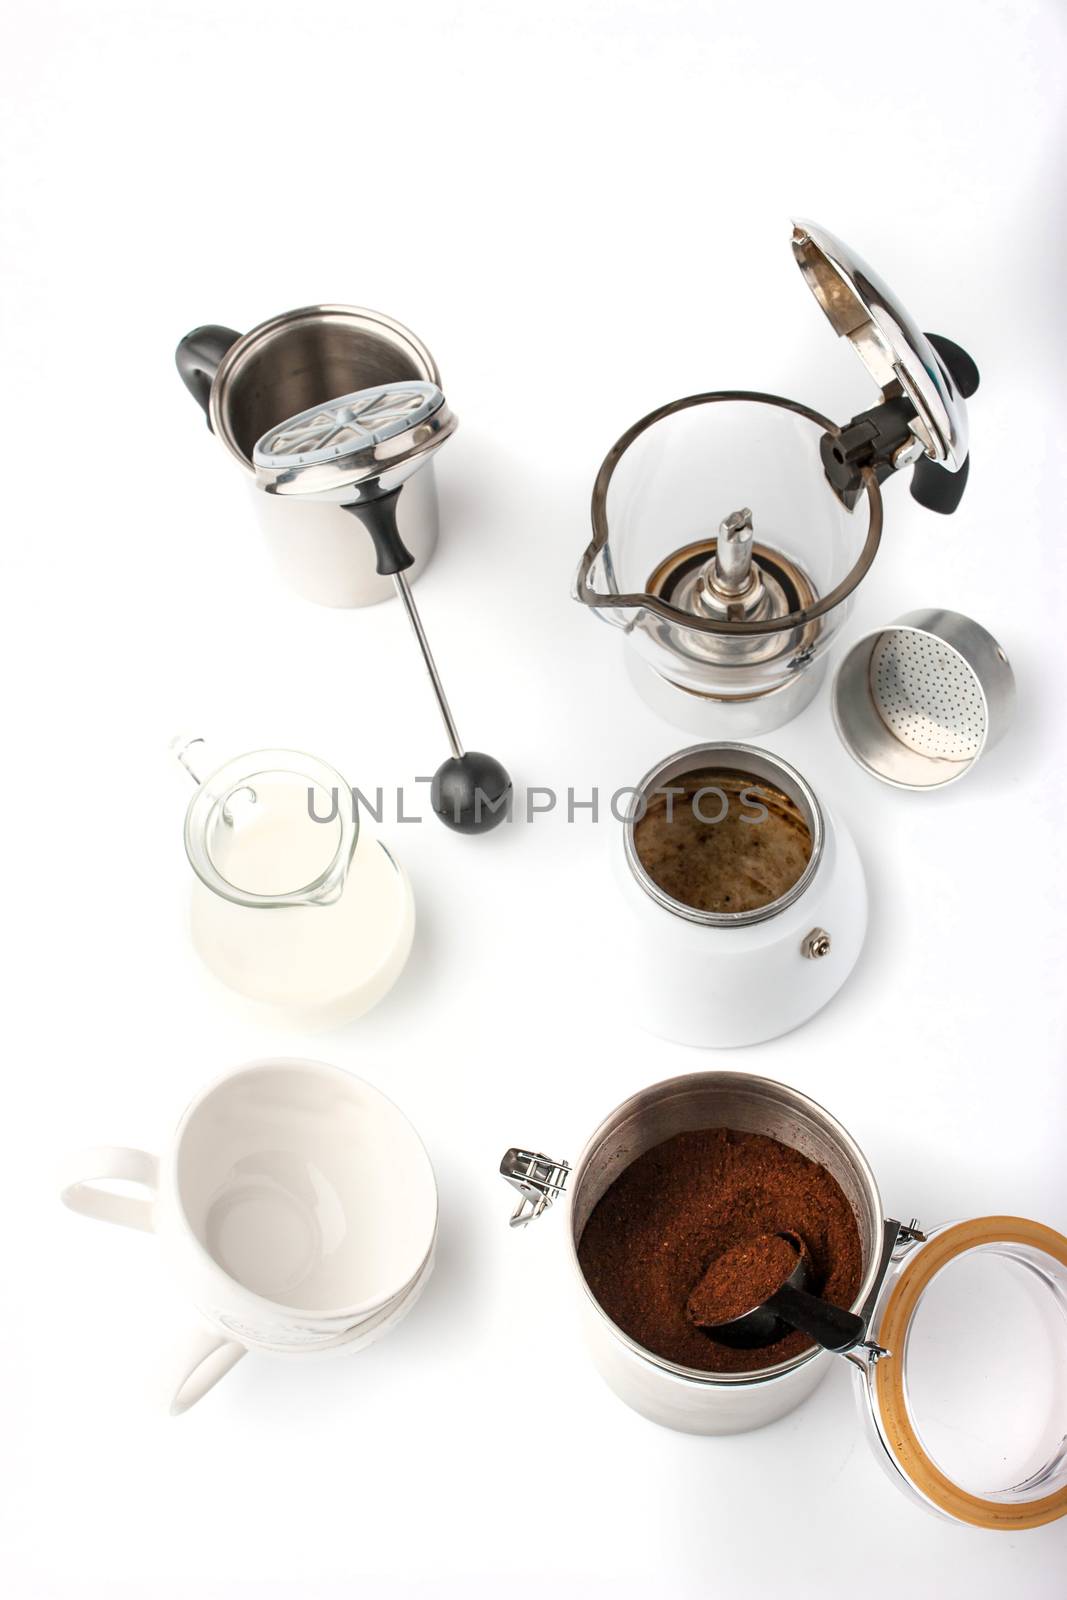 Equipment for preparation coffee by Deniskarpenkov